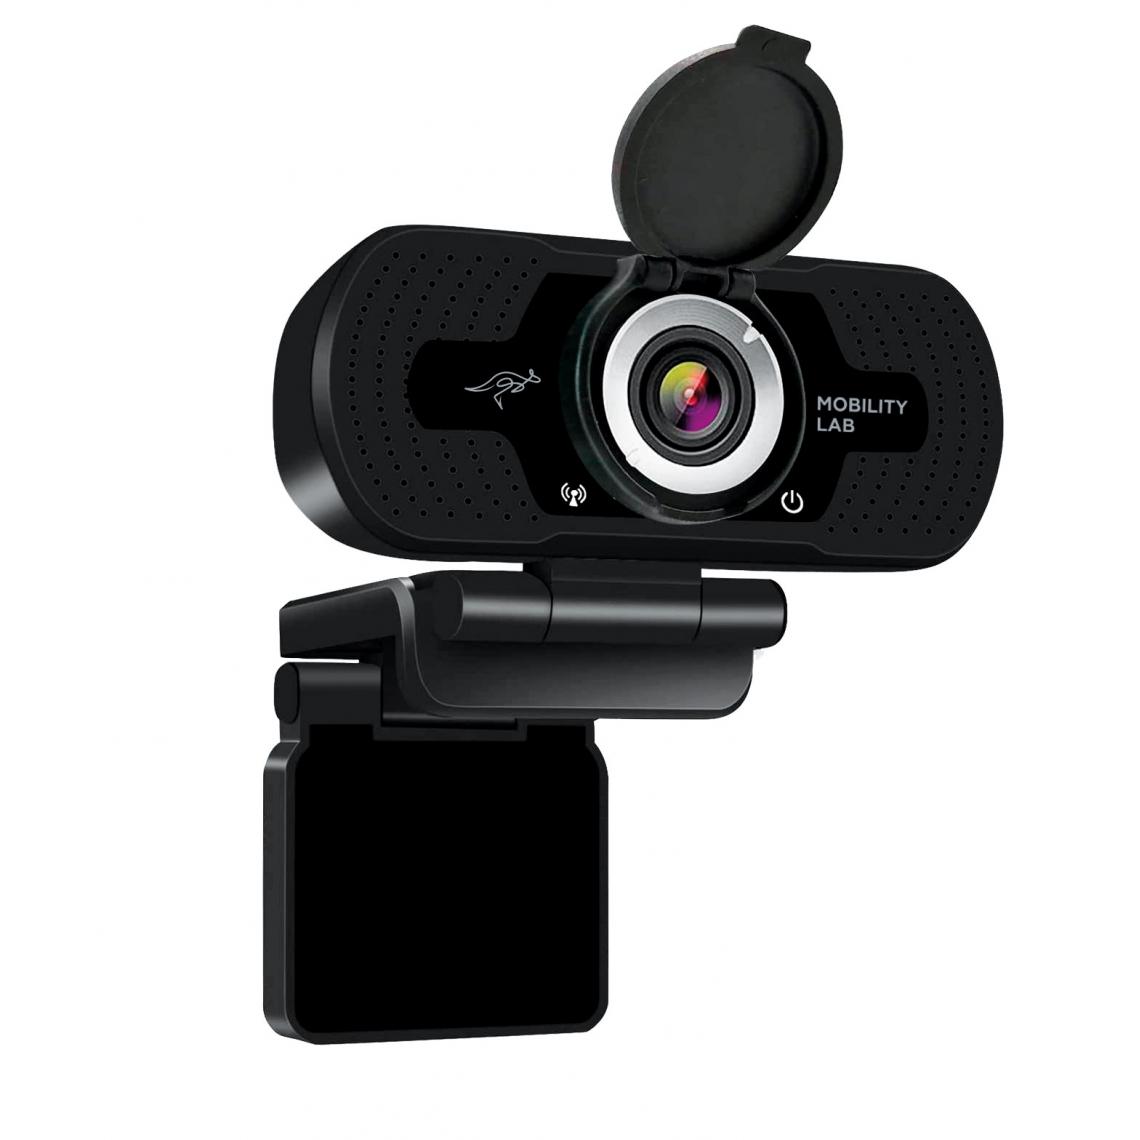 Mobility Lab - MOBILITY LAB - Webcam HD USB Filaire - Webcam